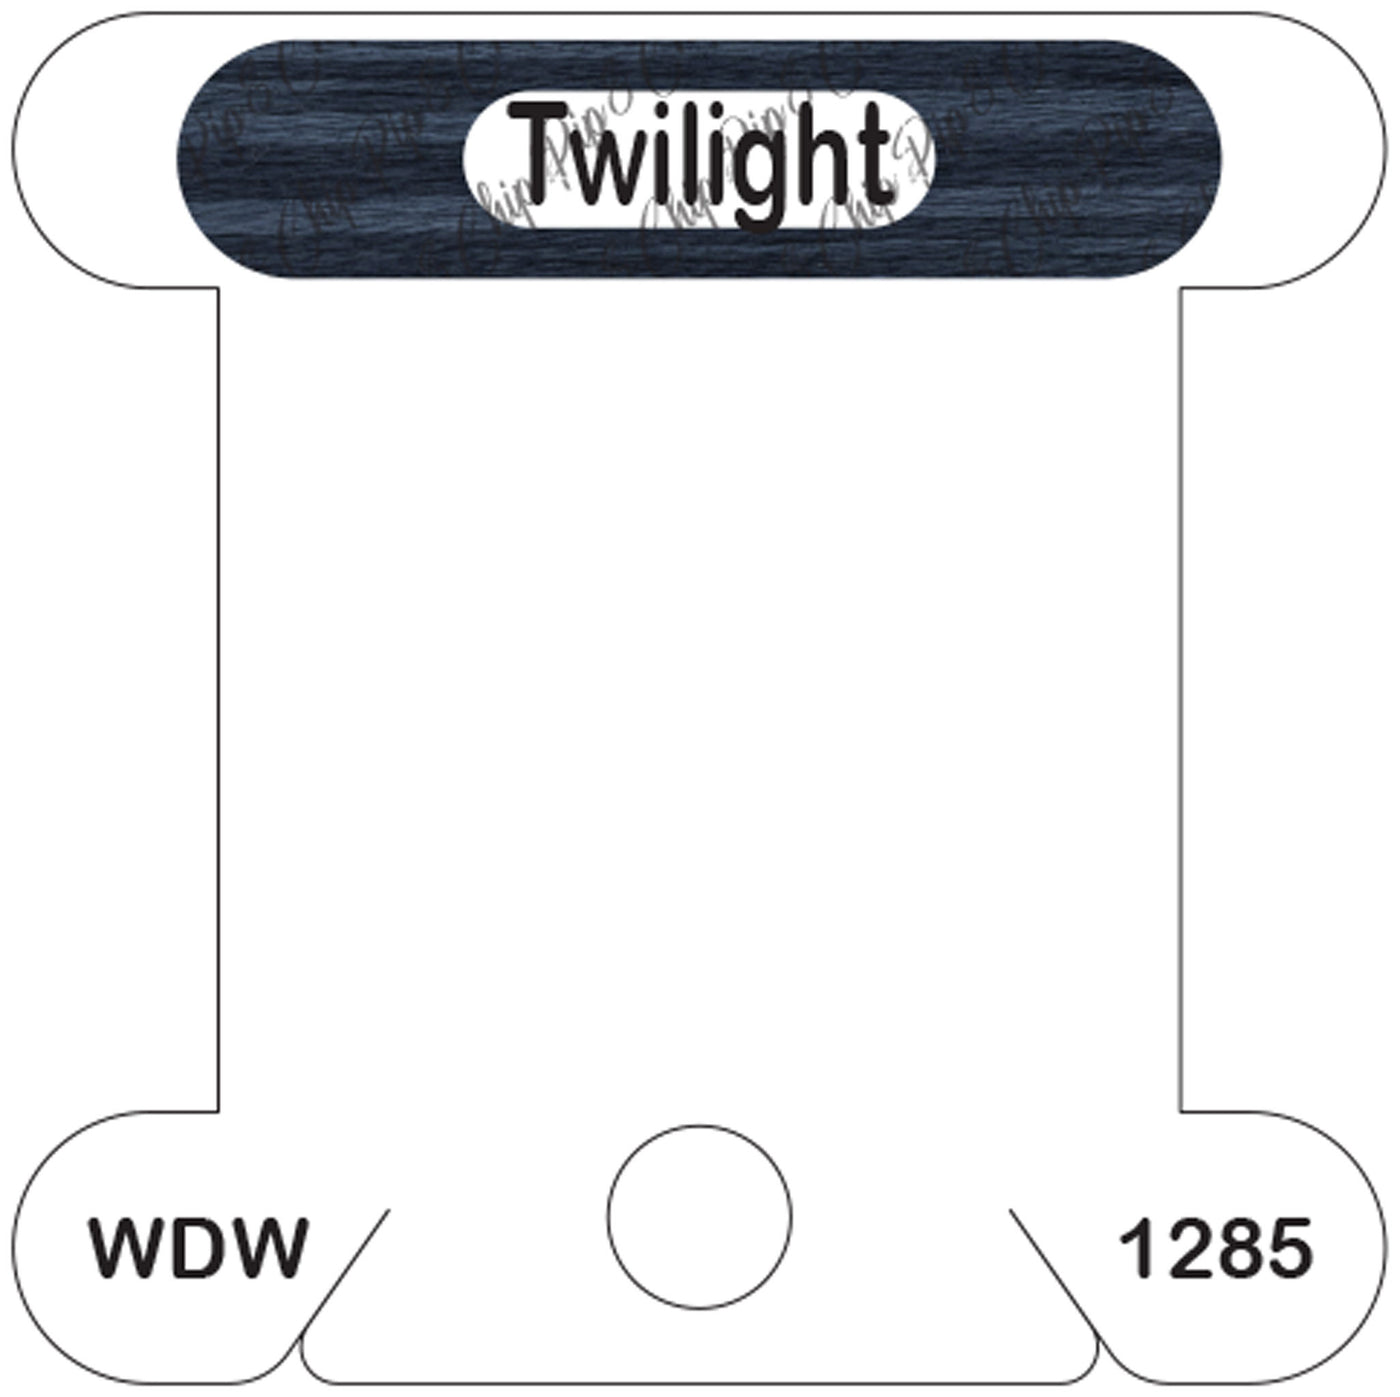 WDW Twilight acrylic bobbin